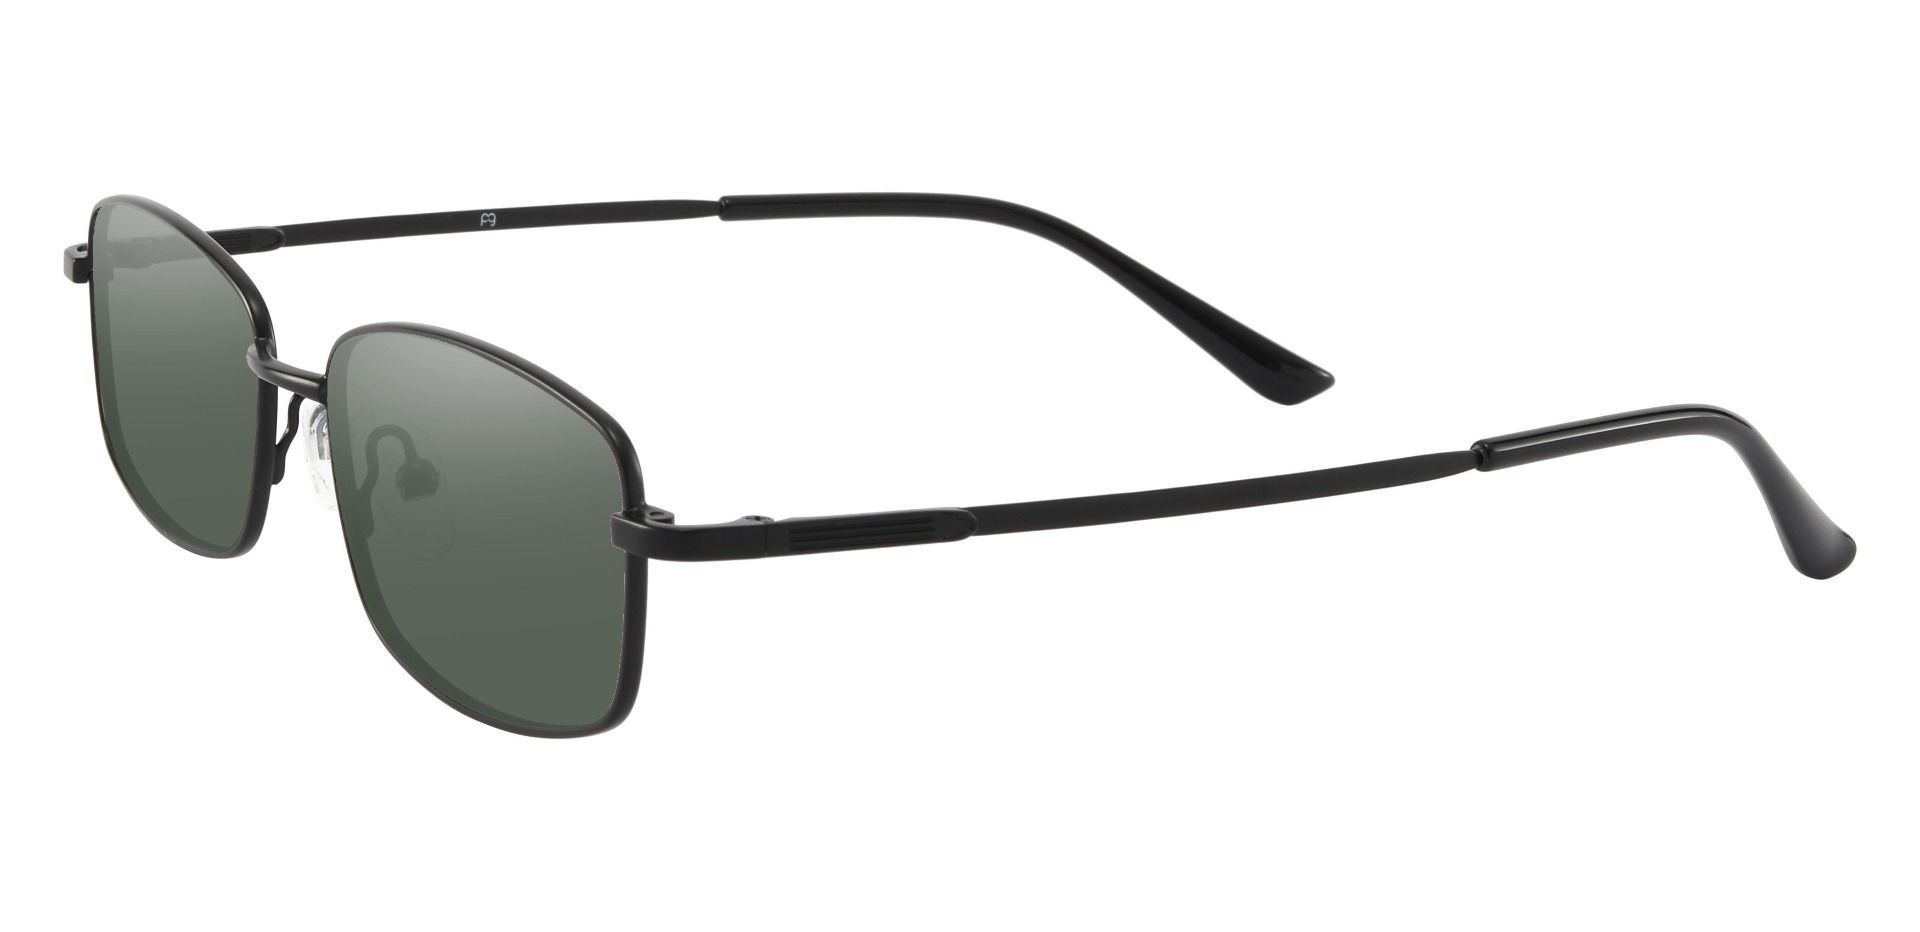 Hellman Rectangle Prescription Sunglasses - Black Frame With Green Lenses